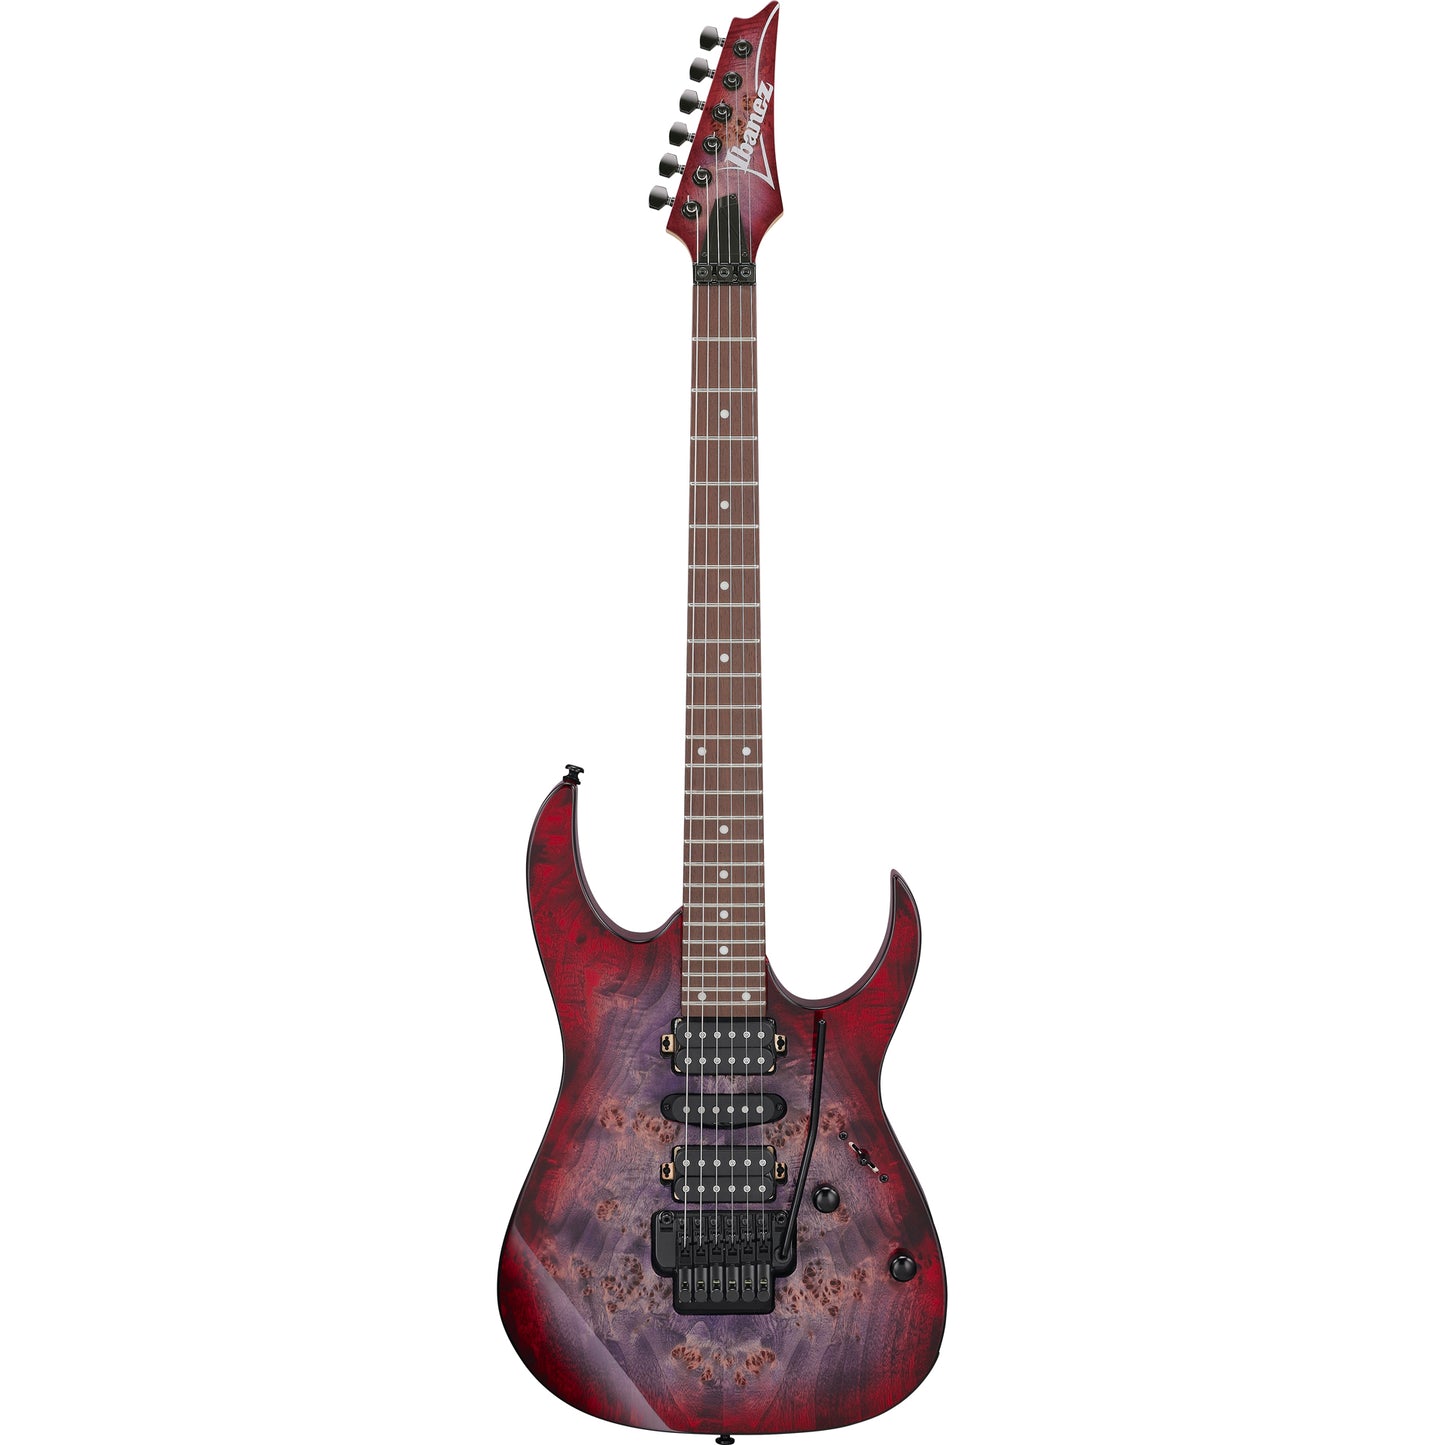 Ibanez RG Standard 6 String Electric Guitar - Red Eclipse Burst